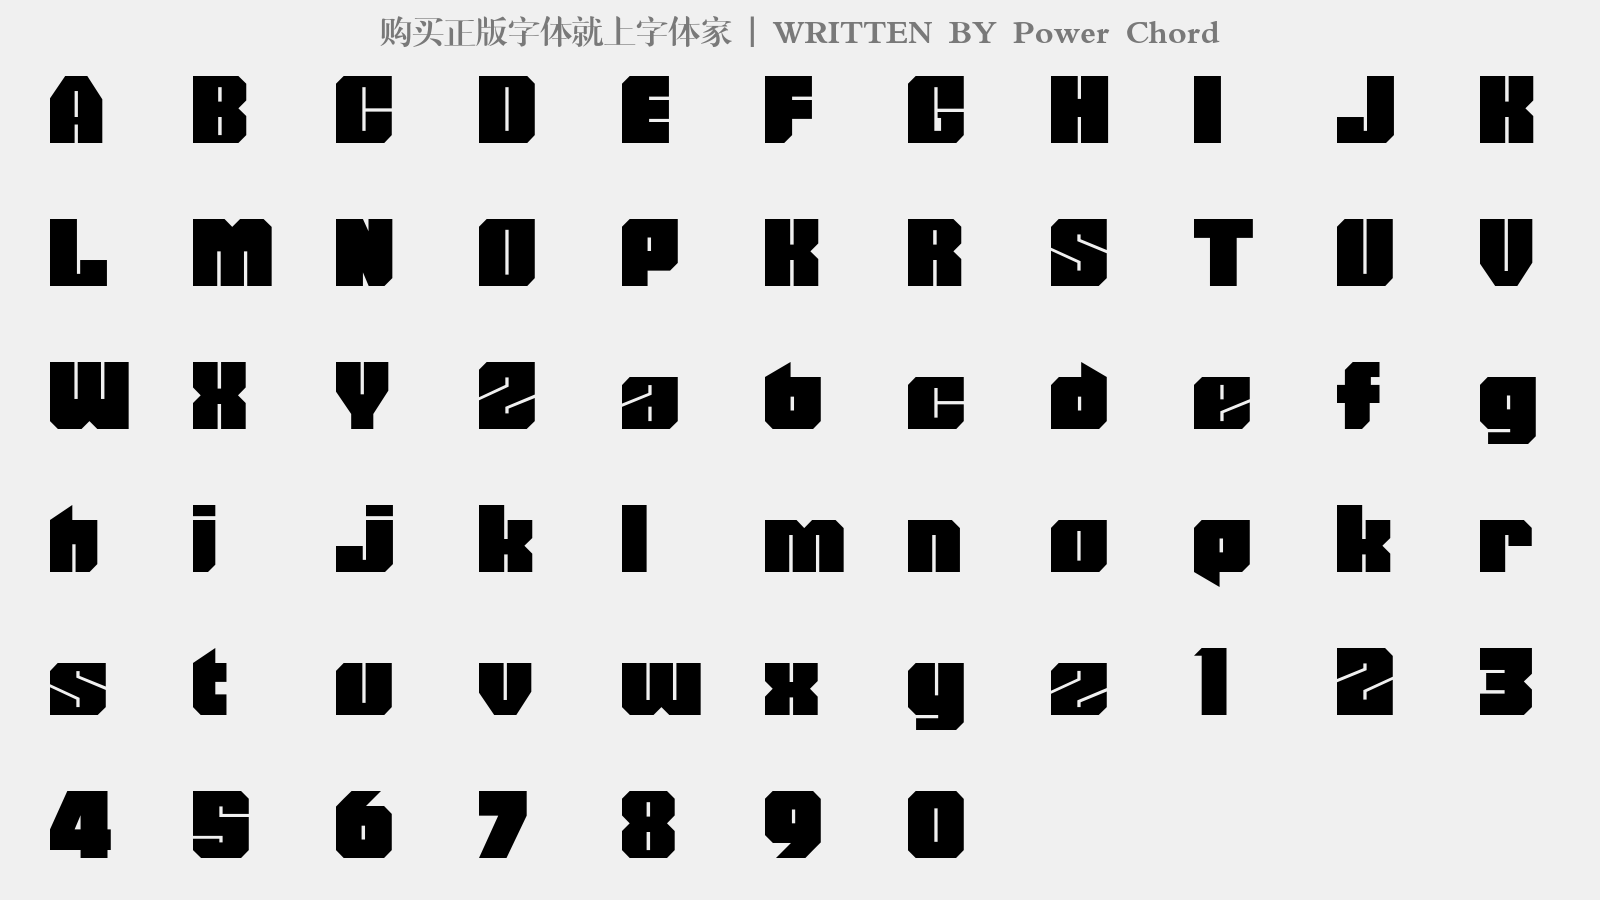 Power Chord - 大写字母/小写字母/数字